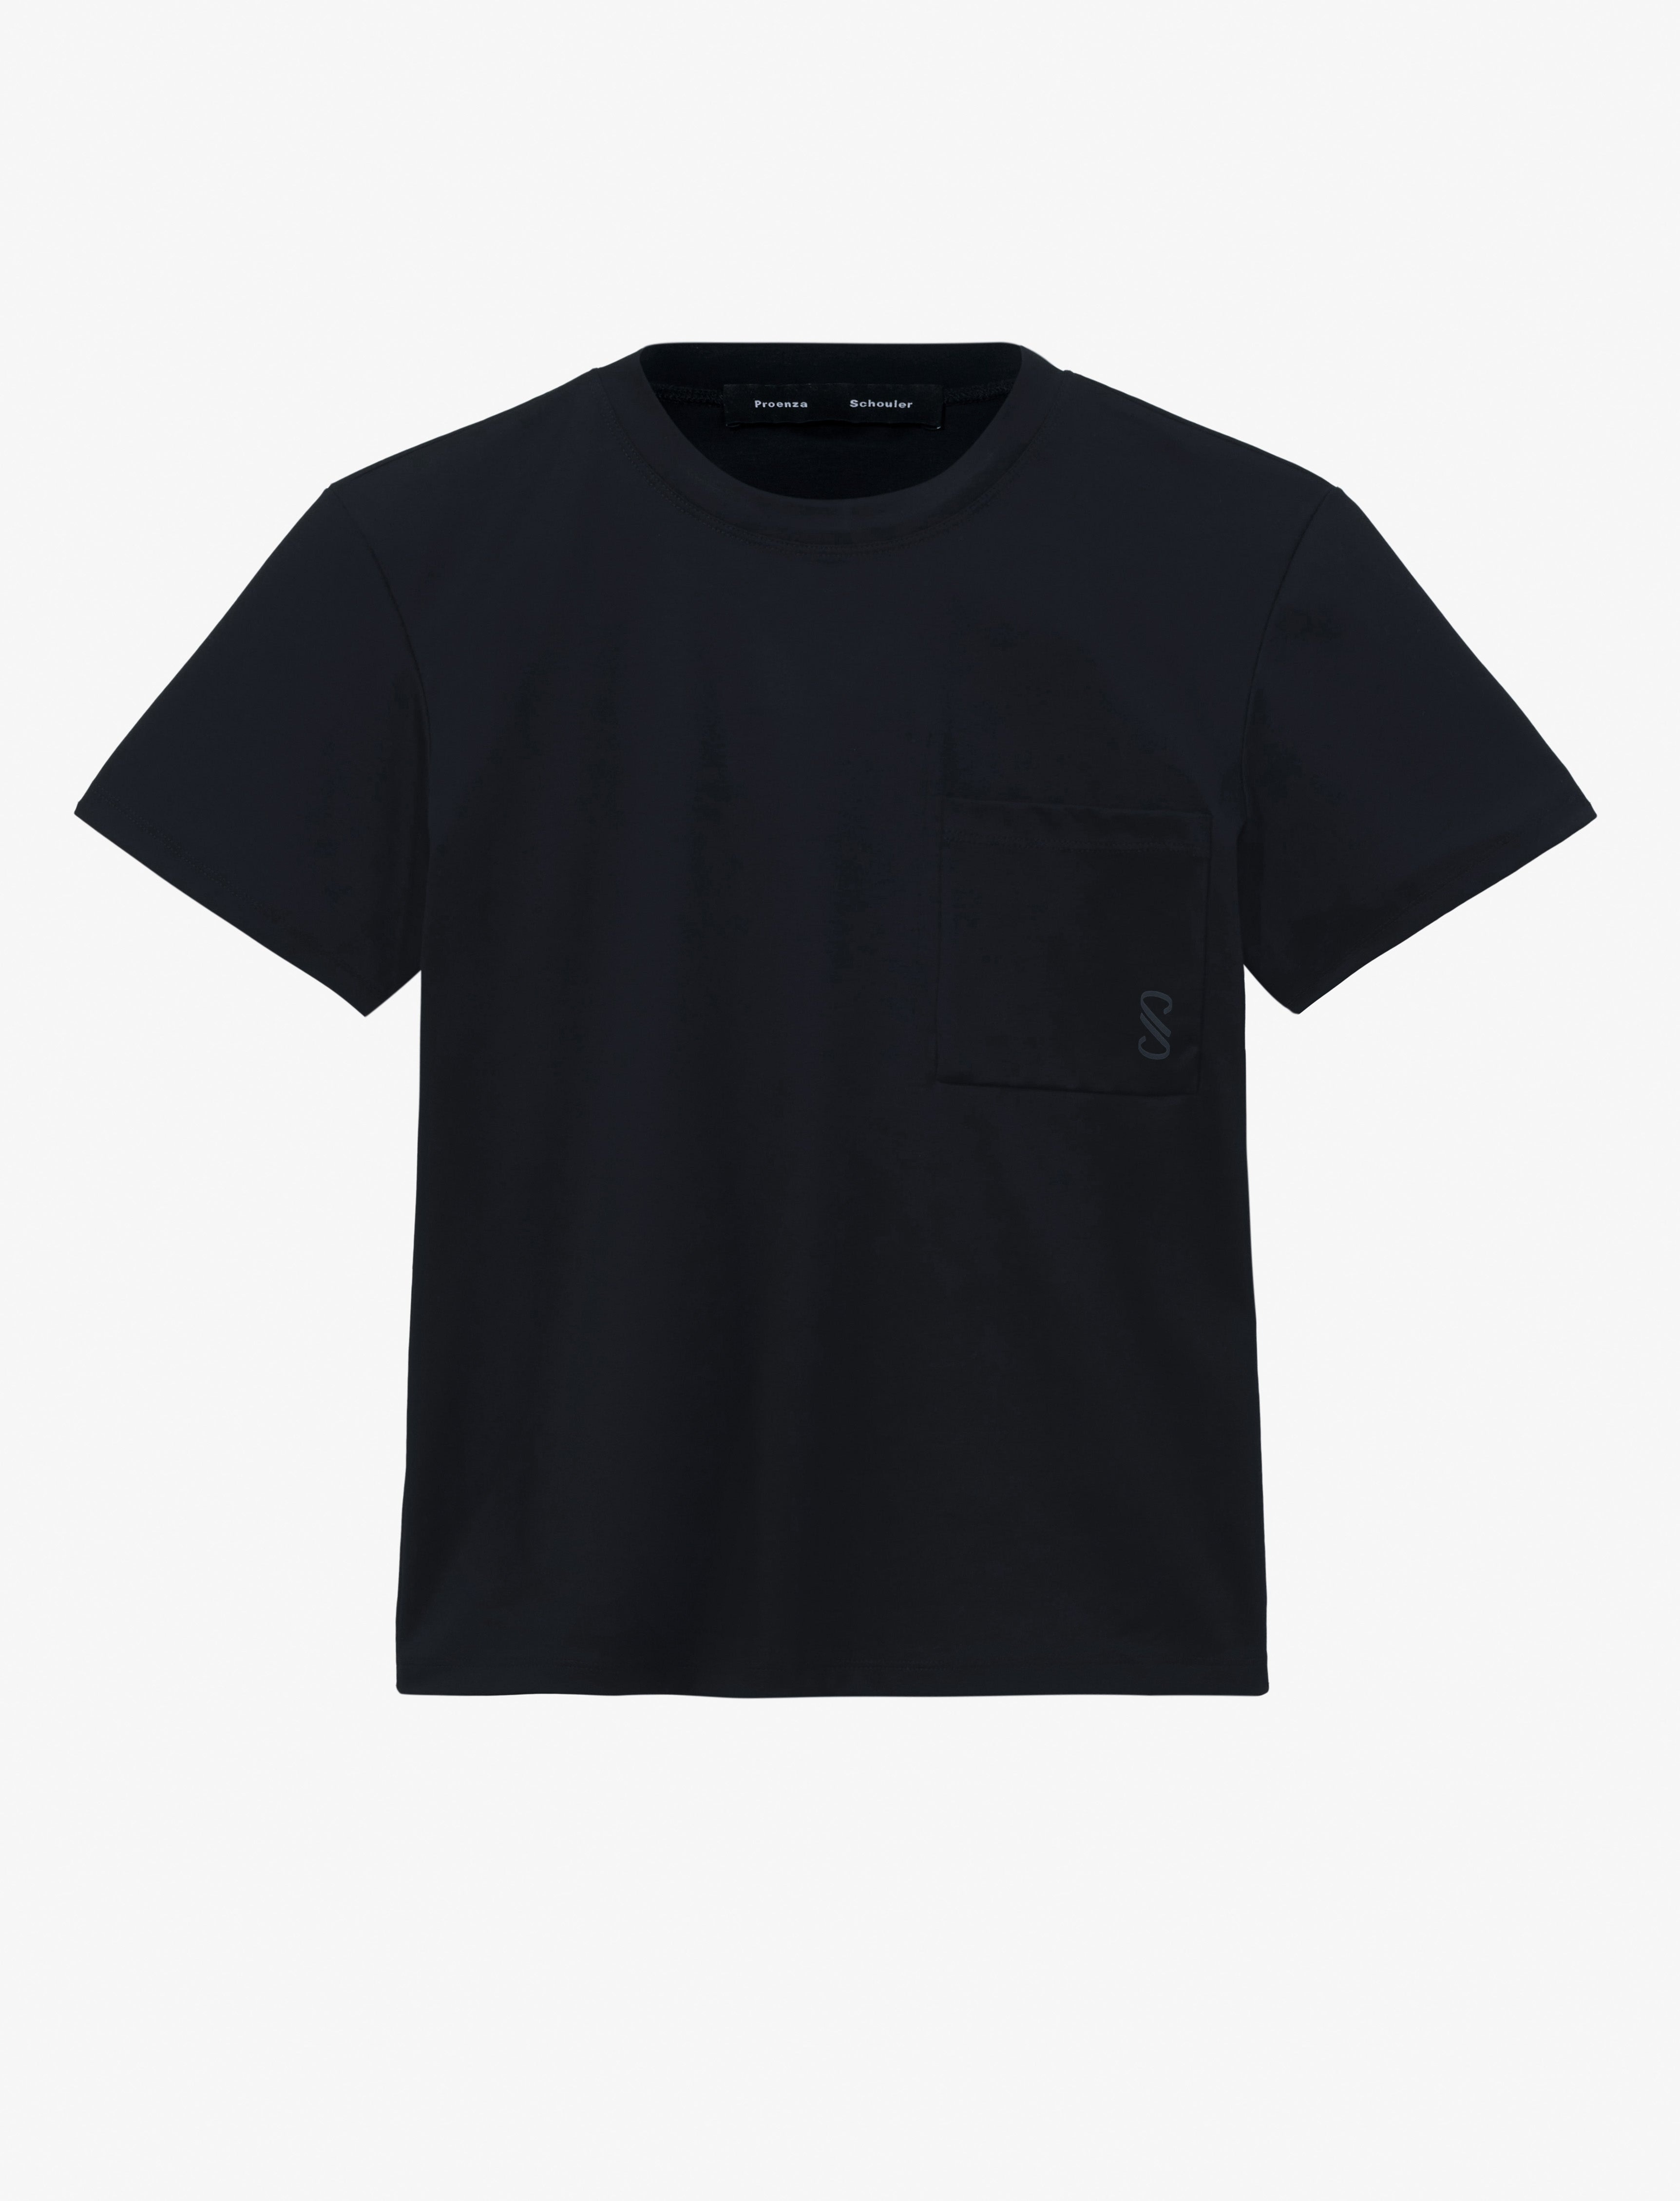 Kira T-Shirt in Eco Cotton Jersey - 1